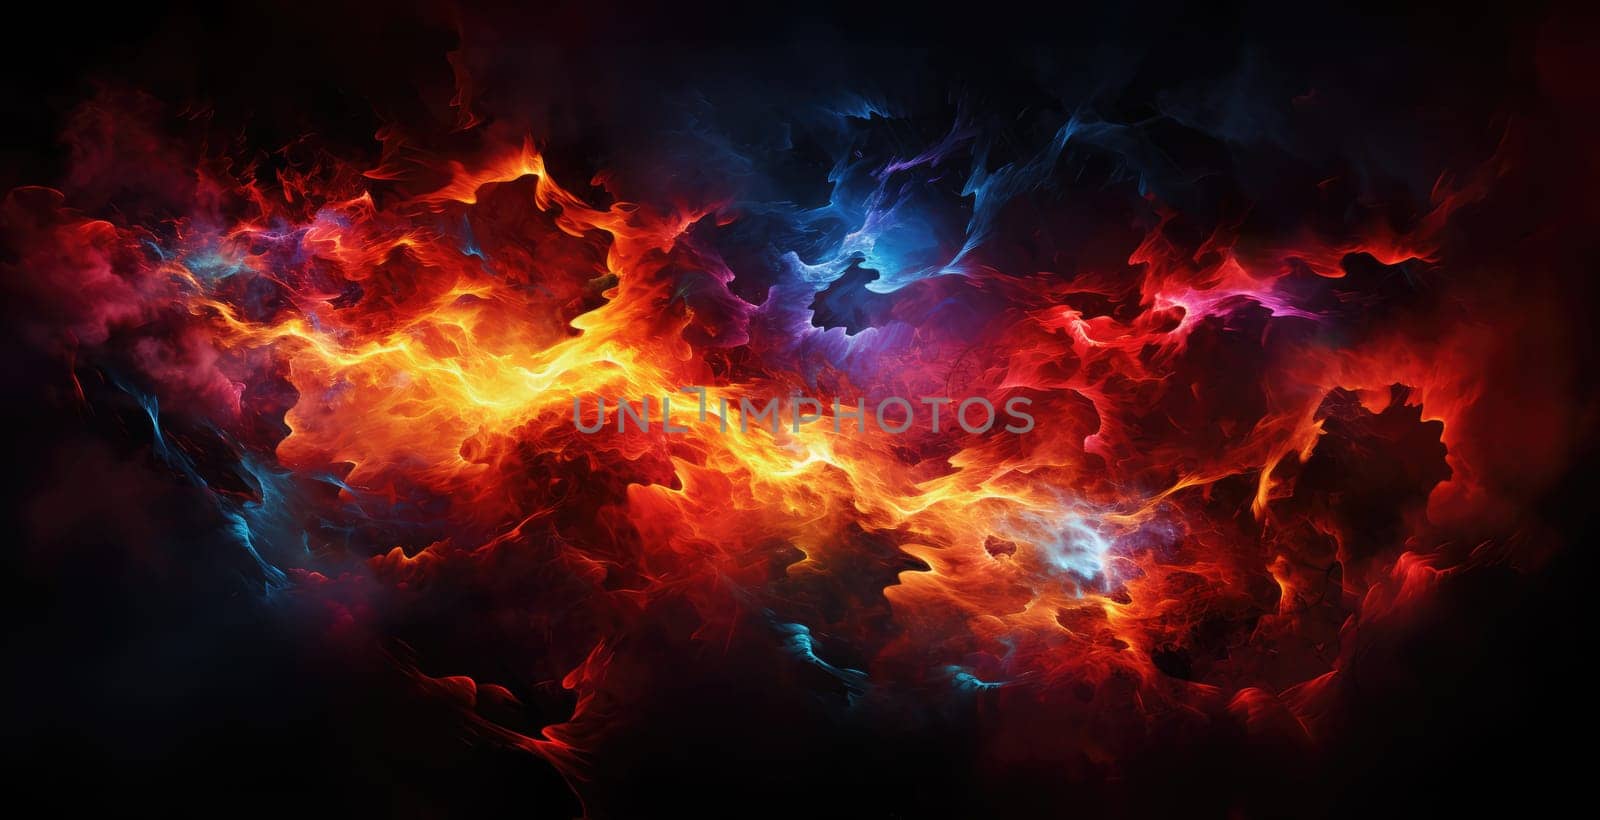 Fiery flame with dark background by palinchak